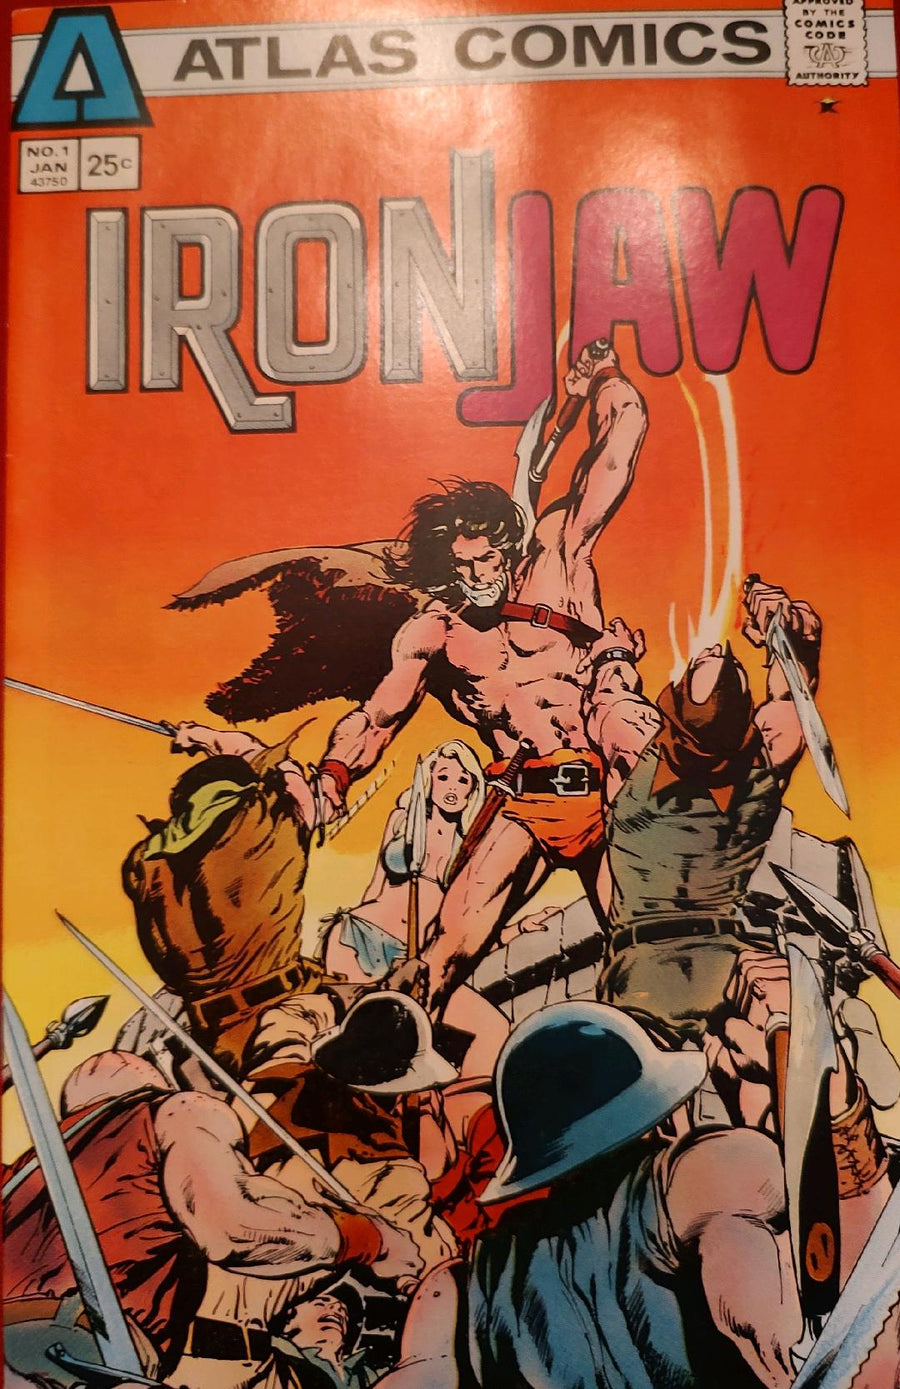 IronJaw #1 Comic Book Cover